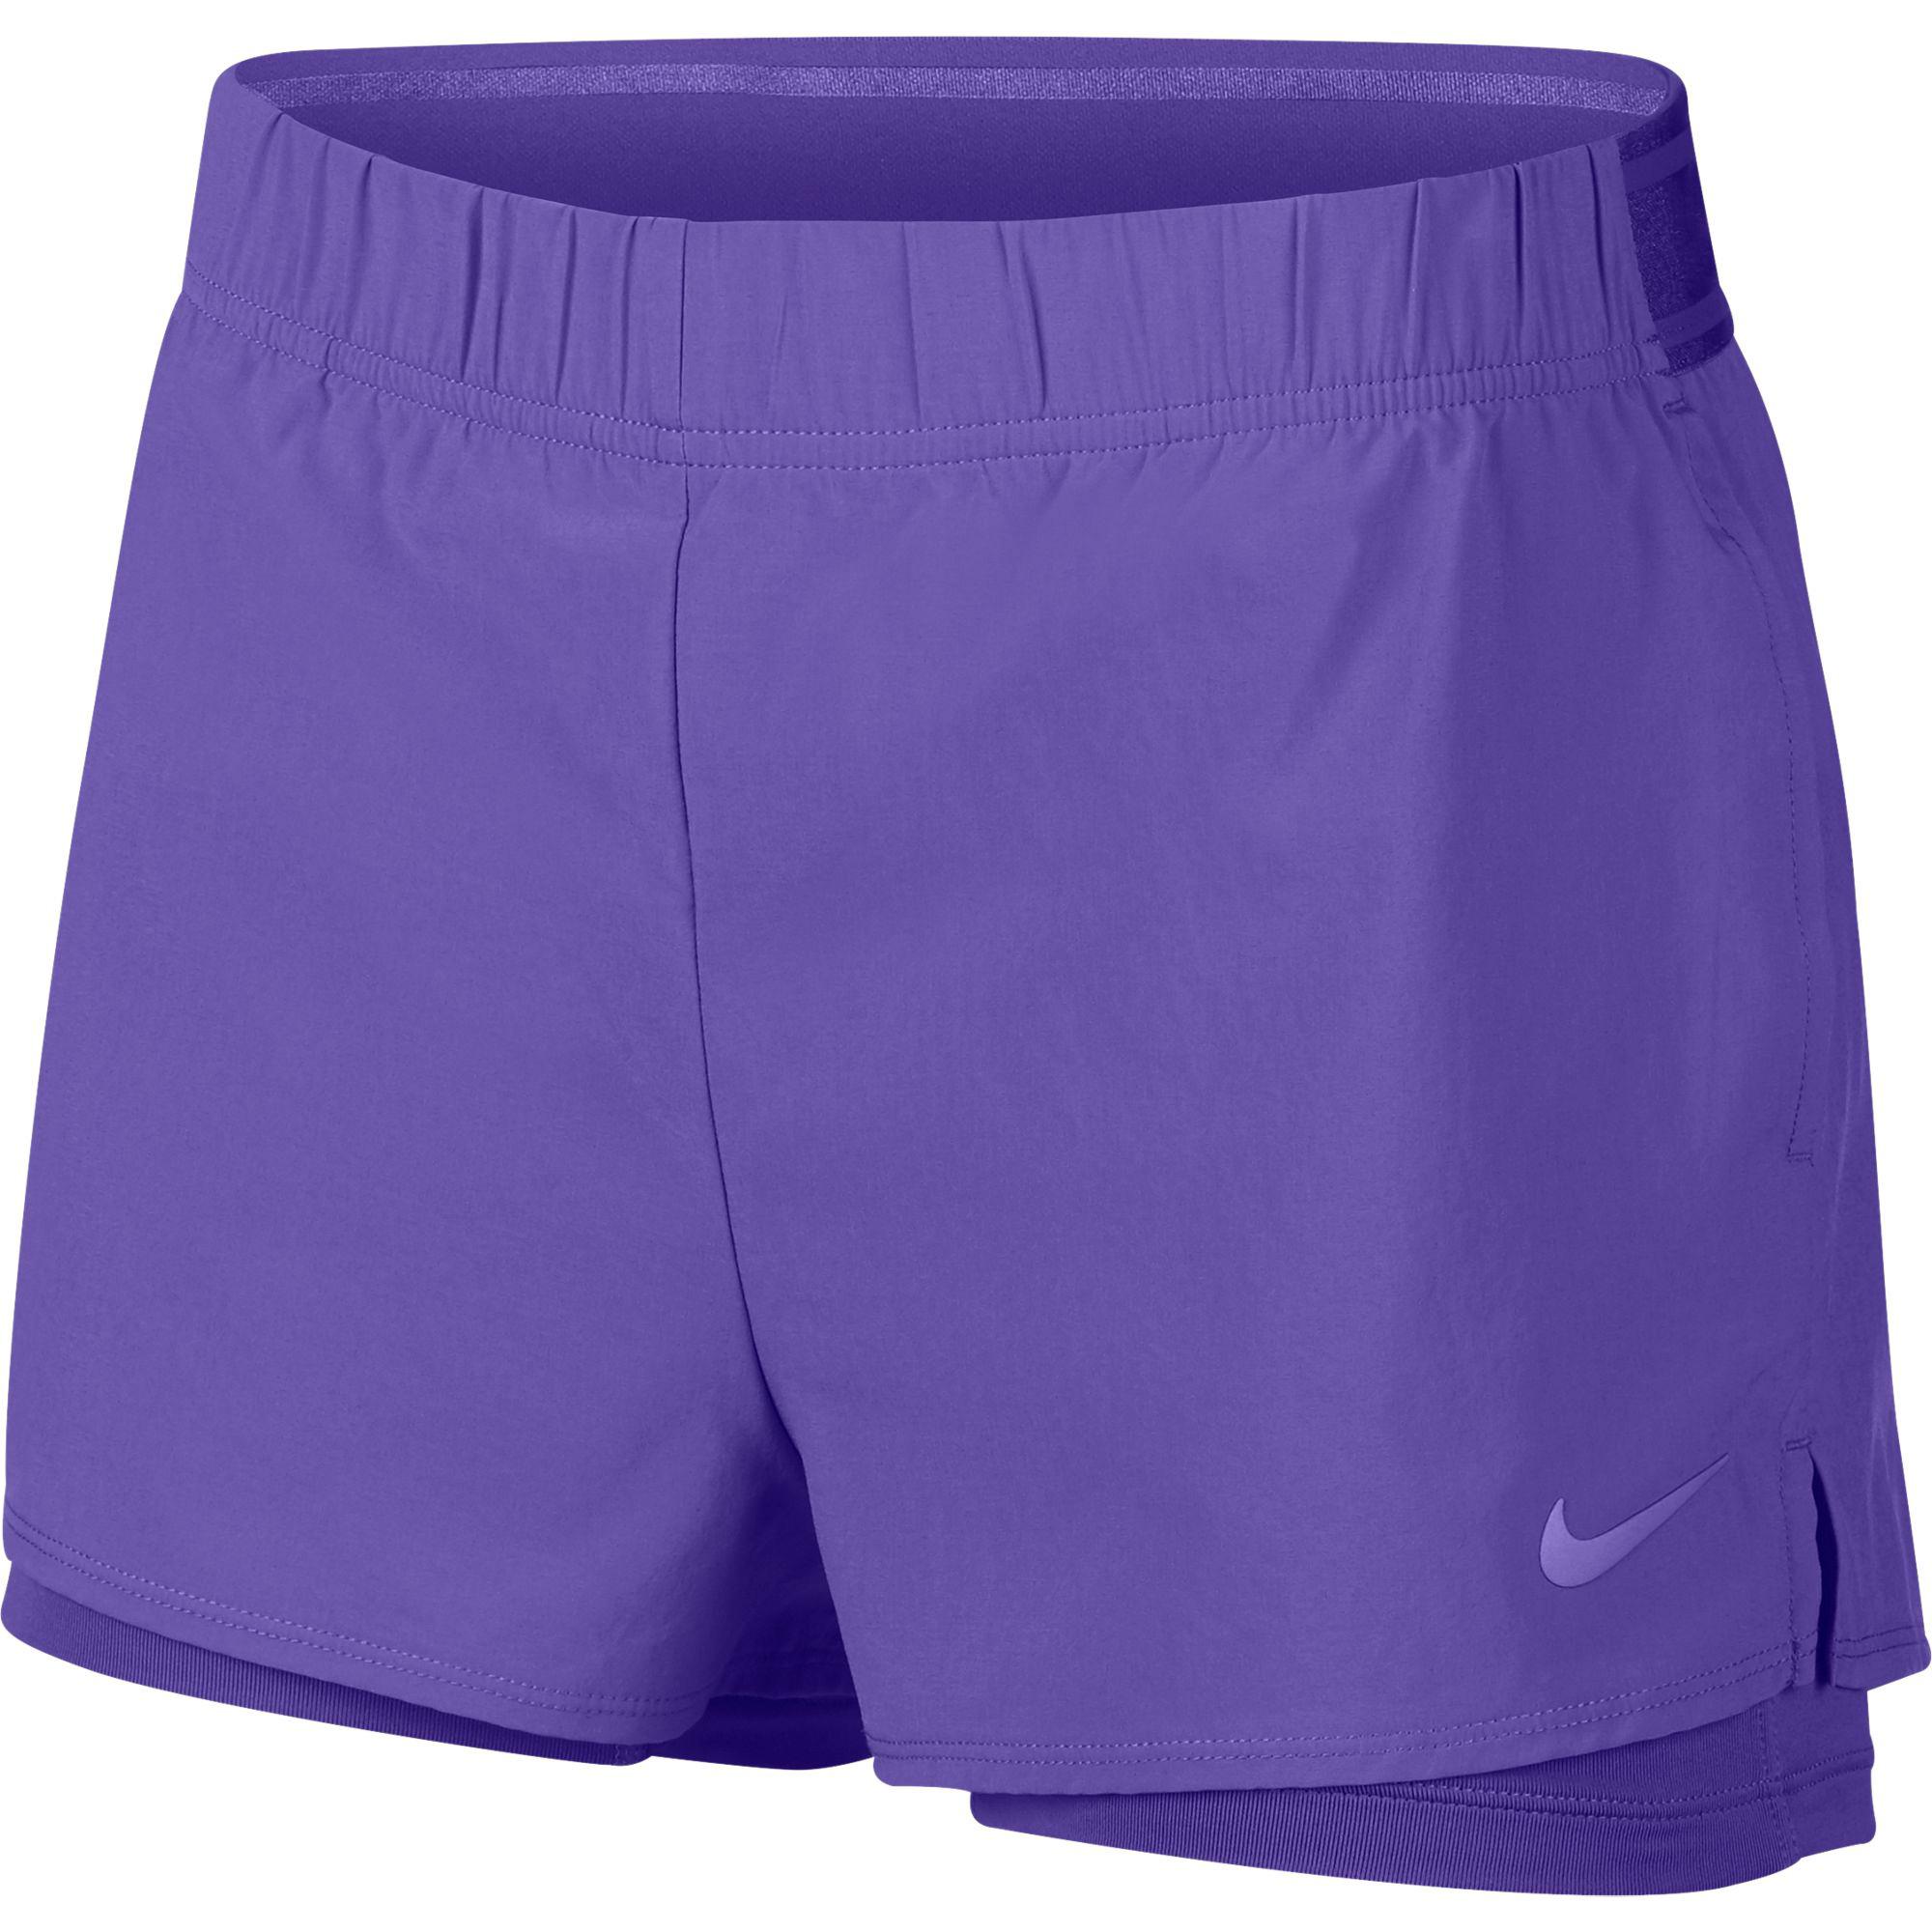 purple nike shorts womens